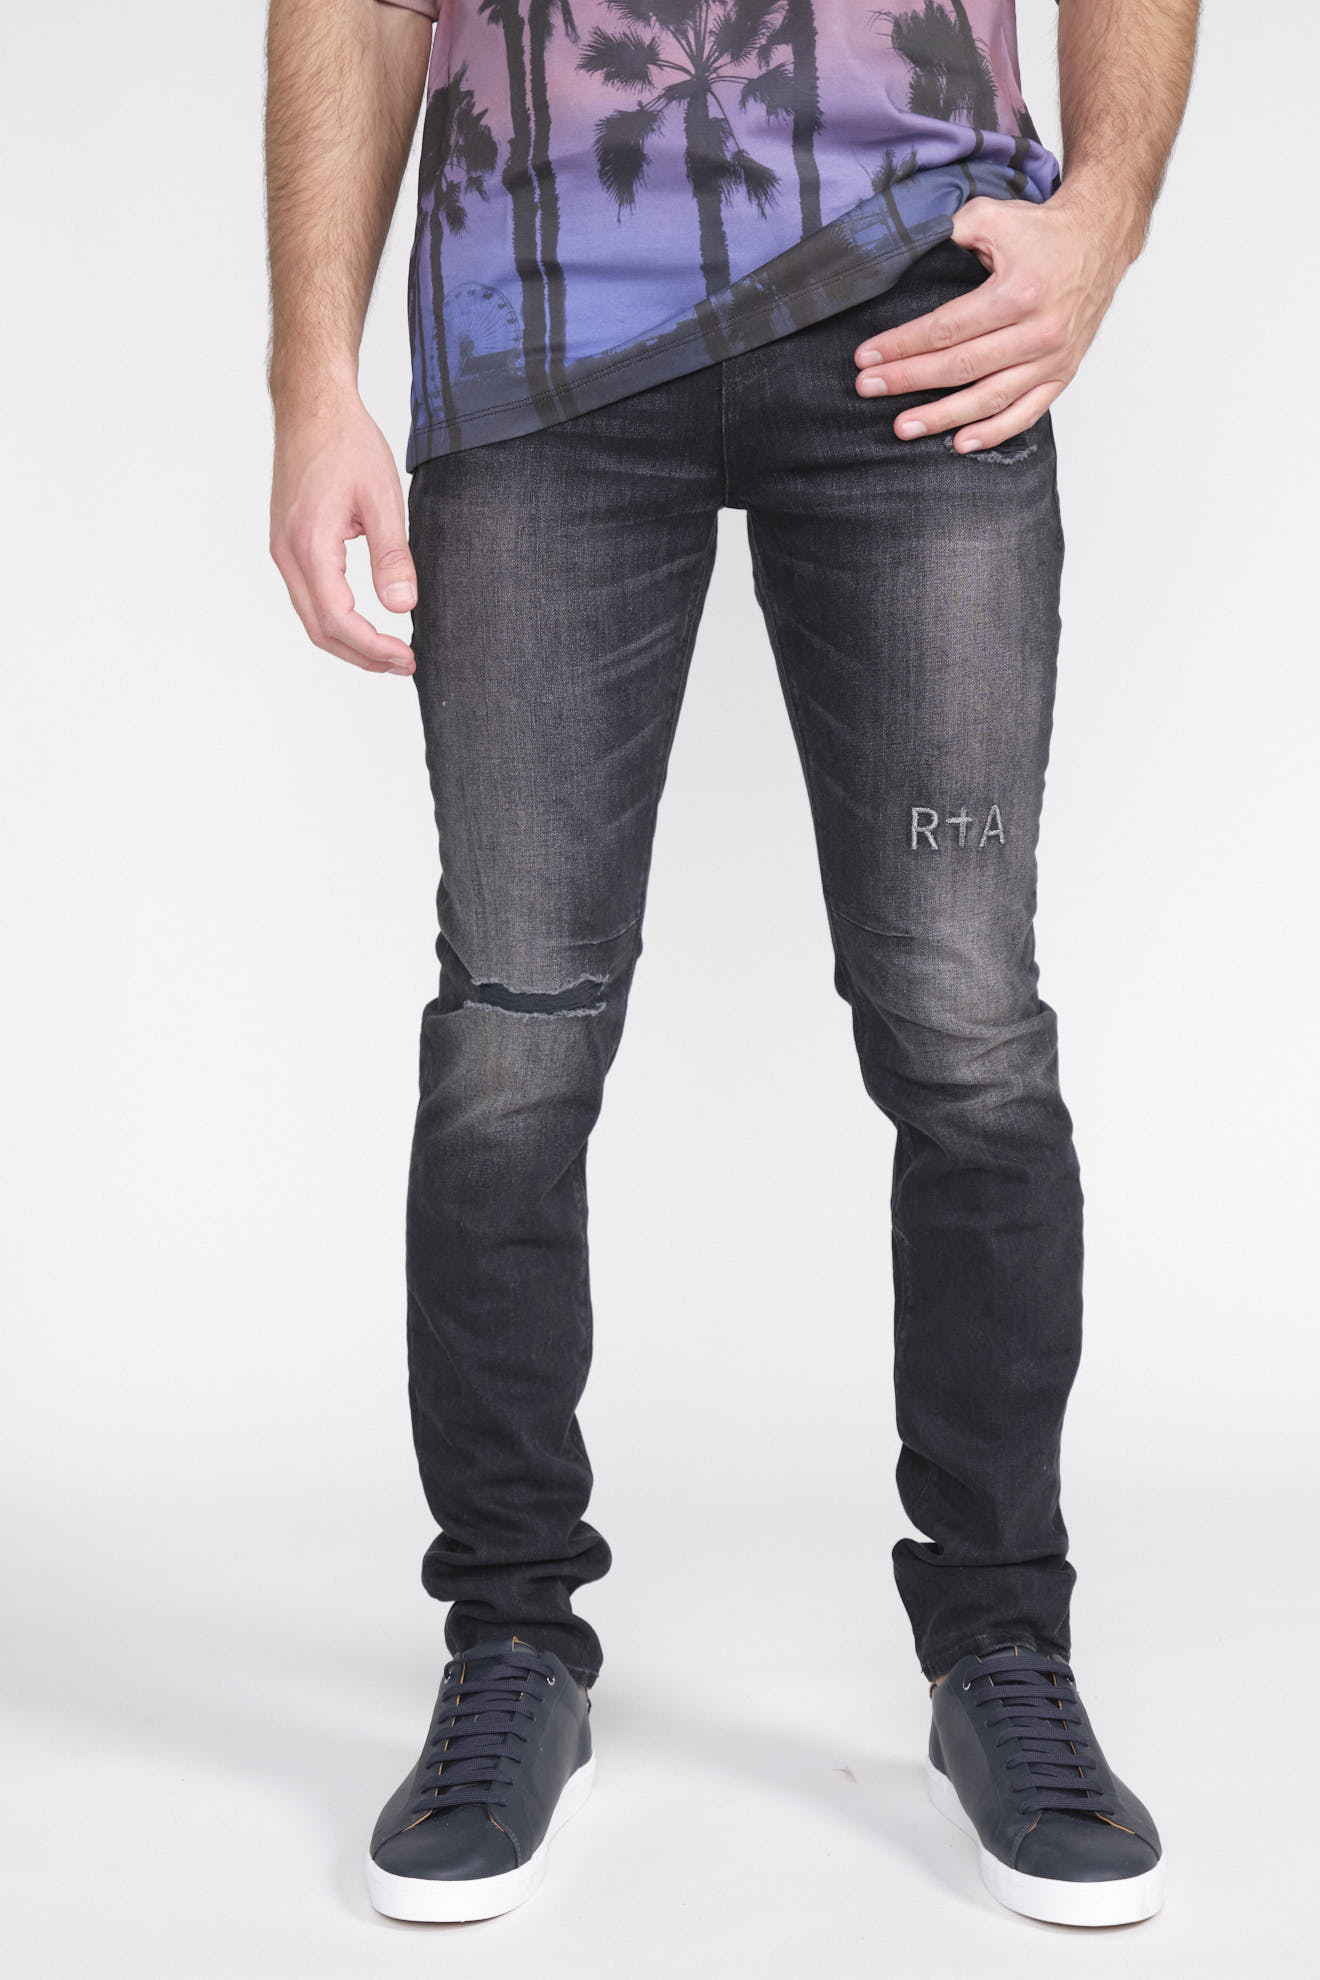 RtA Classic Pintuck - Jeans pants  grey 33